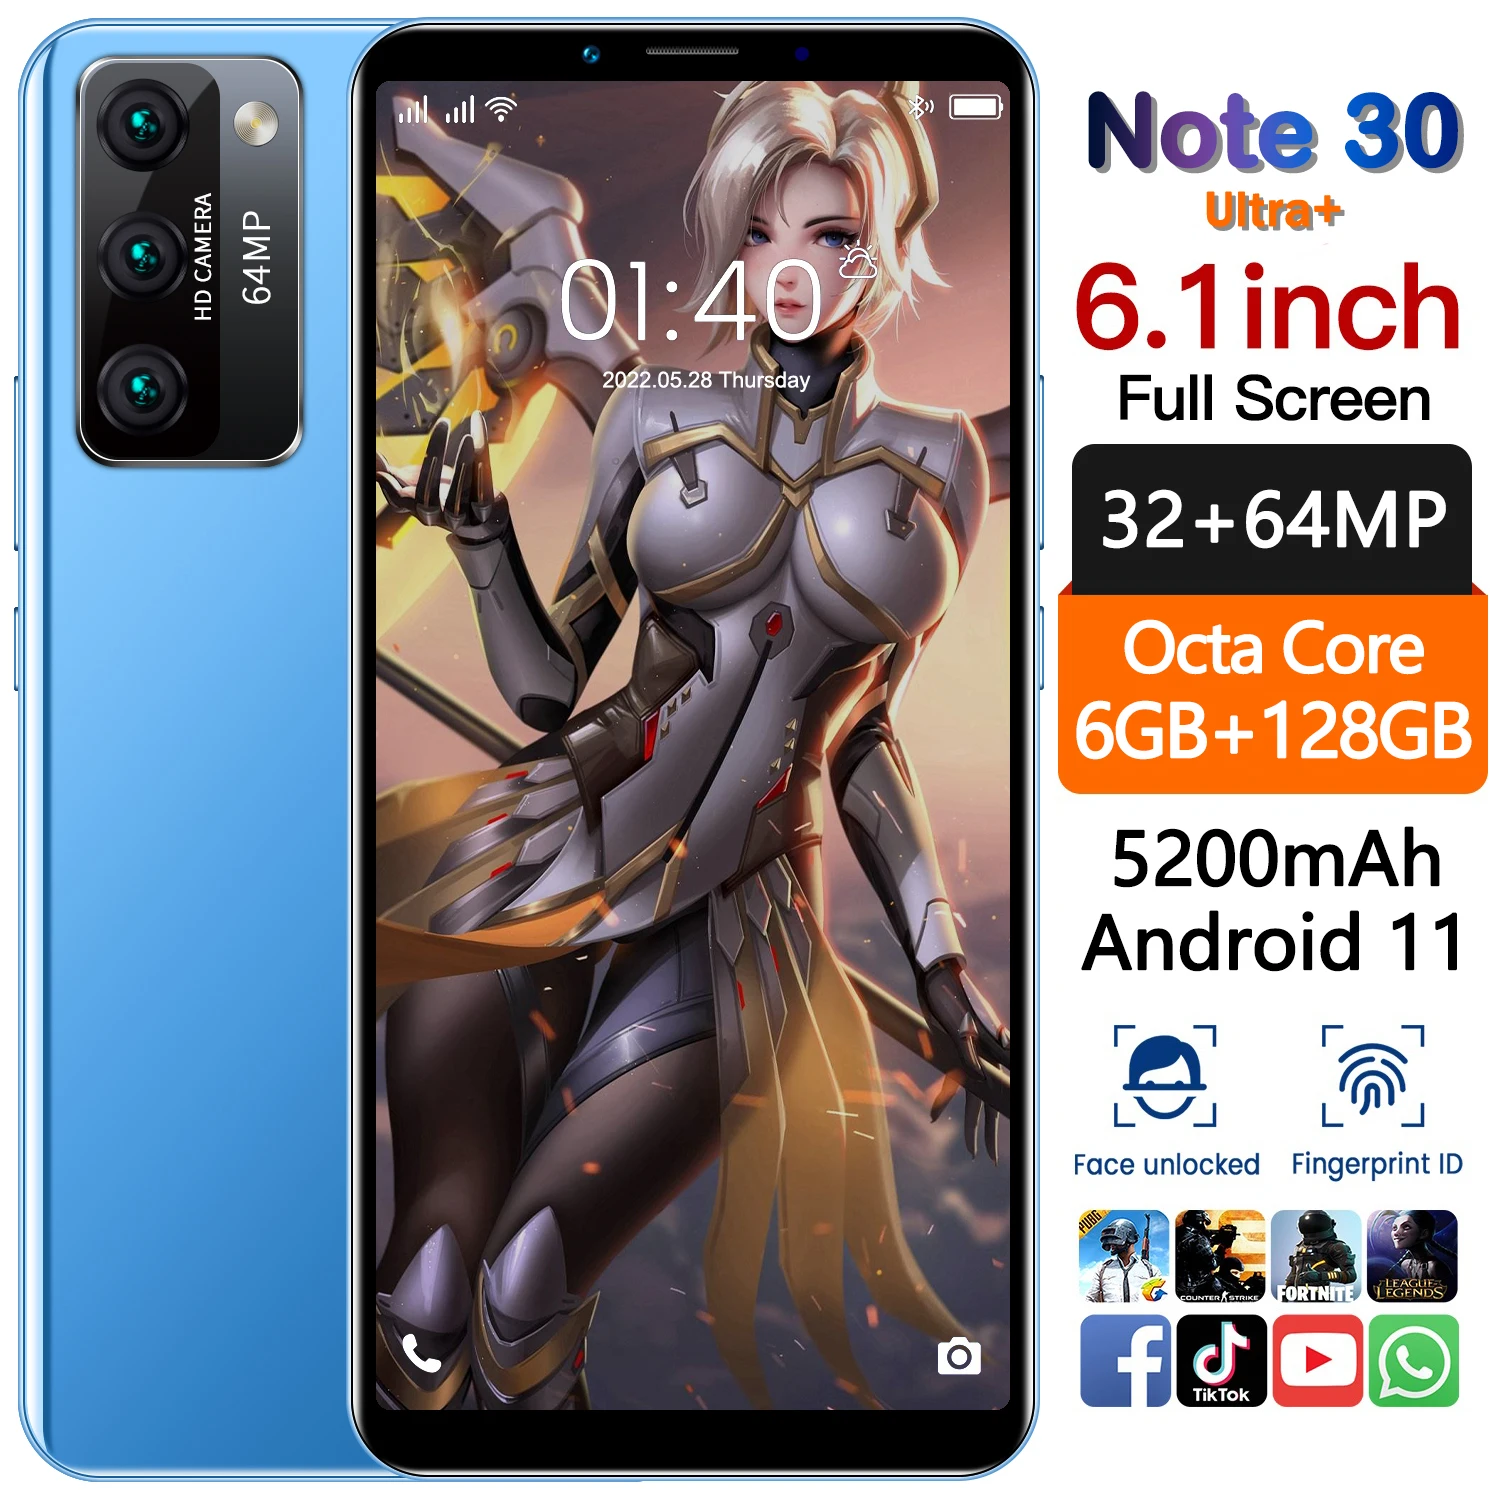 2023 New Hot HTM Note30 Ultra Smartphone 6.1 Inch Fingerprint Unlock Android 12 5200mAh Global Version Mobile Phones Low Price